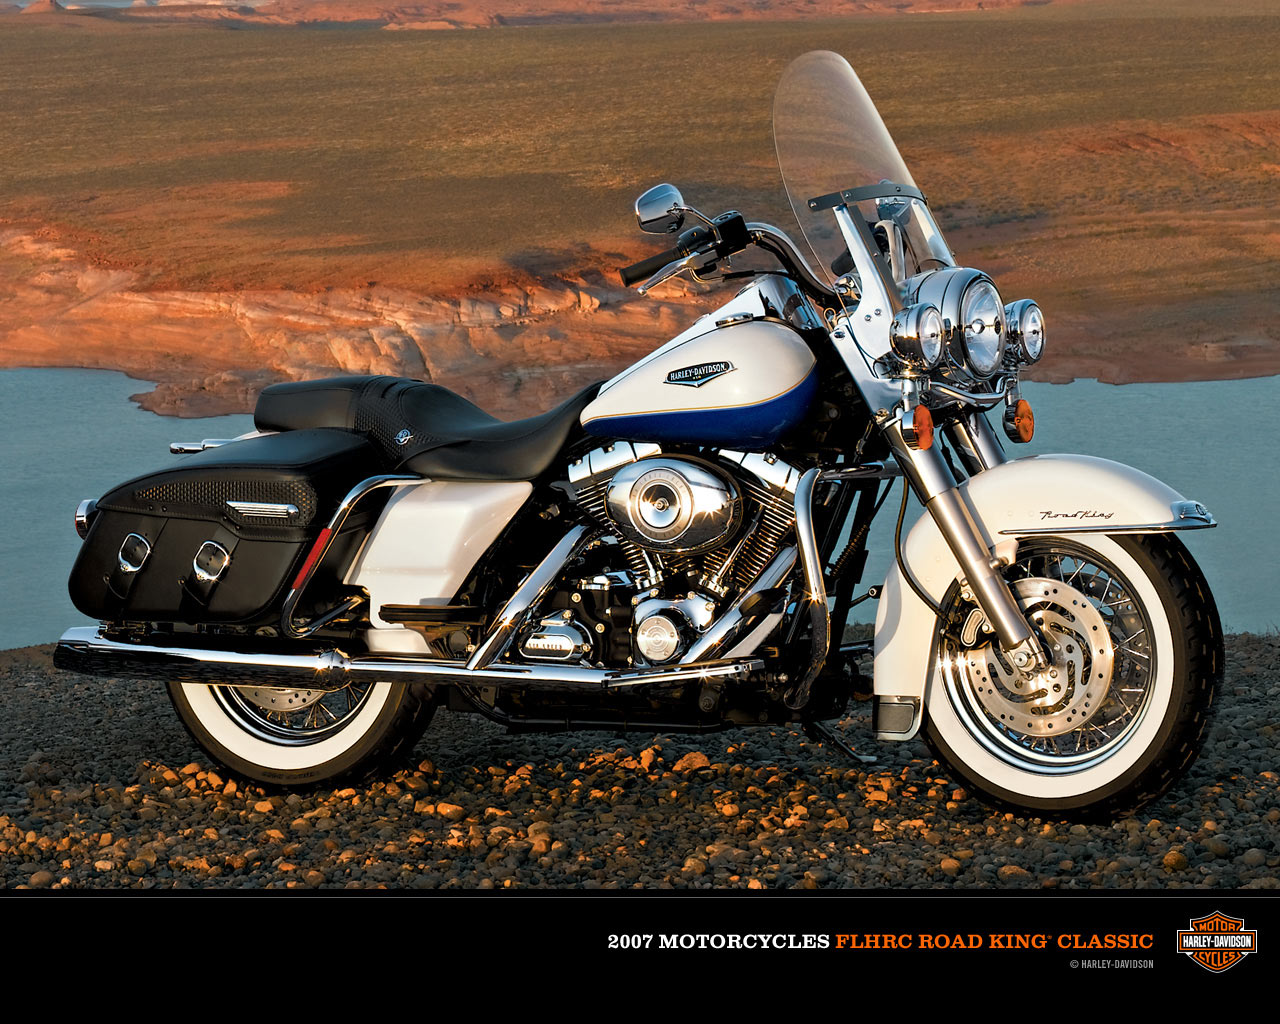 HD Harley Davidson Wallpaper Bestscreenwallpaper